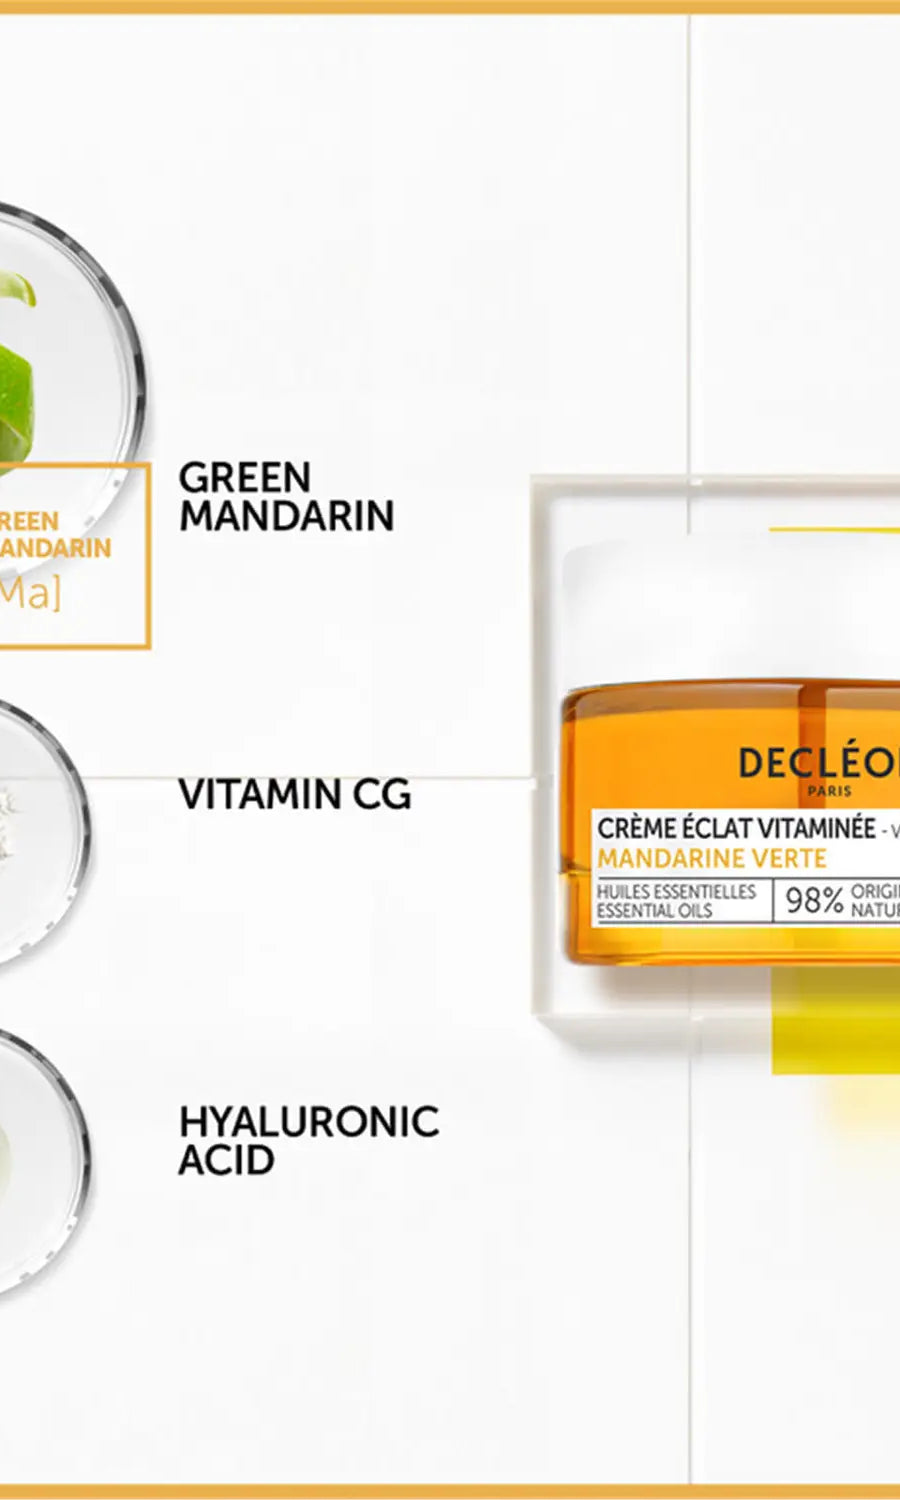 Decléor Green Mandarin Vitamin Glow Day Cream with Hyaluronic Acid 50ml Grace Beauty